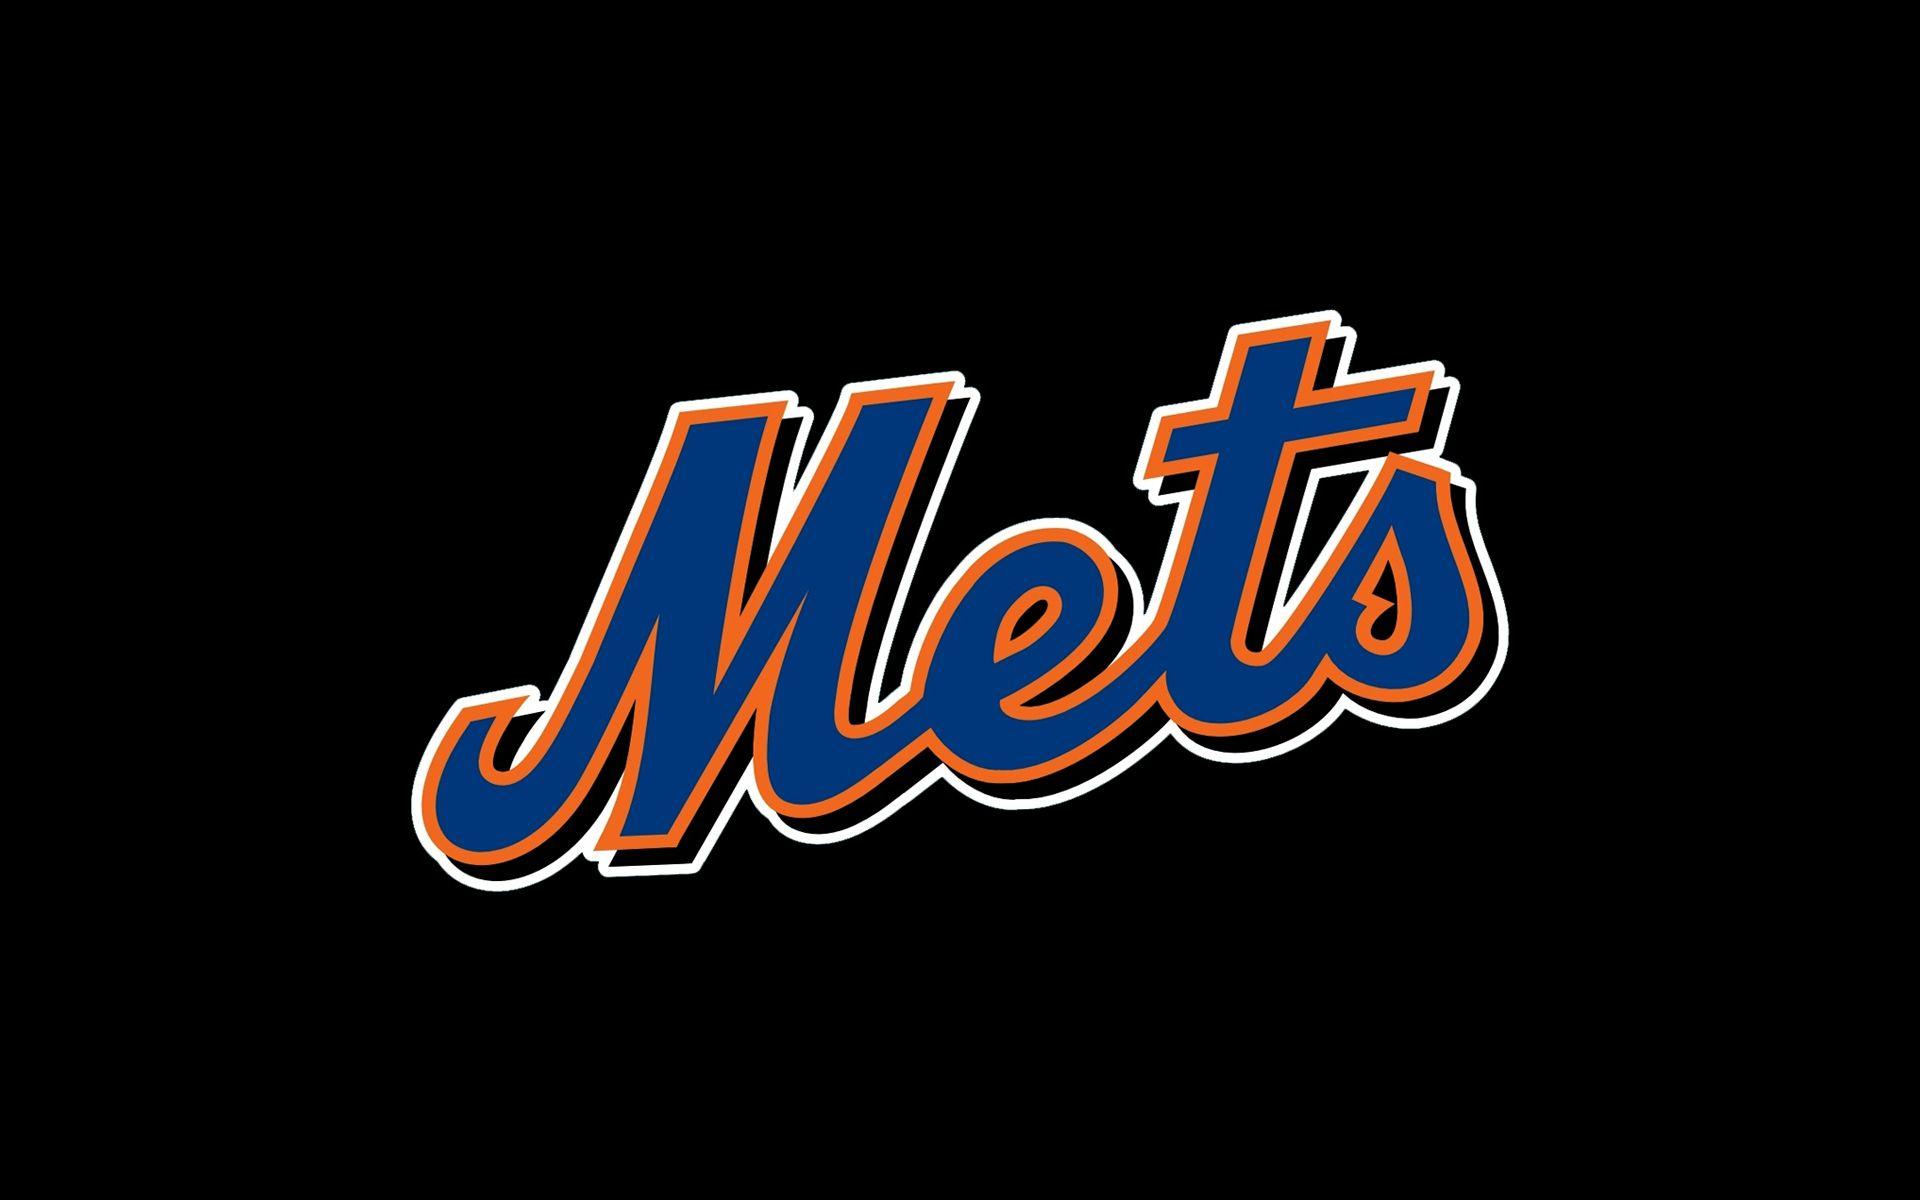 New York Mets Logo Desktop Wallpaper 50289 1920x1200 px